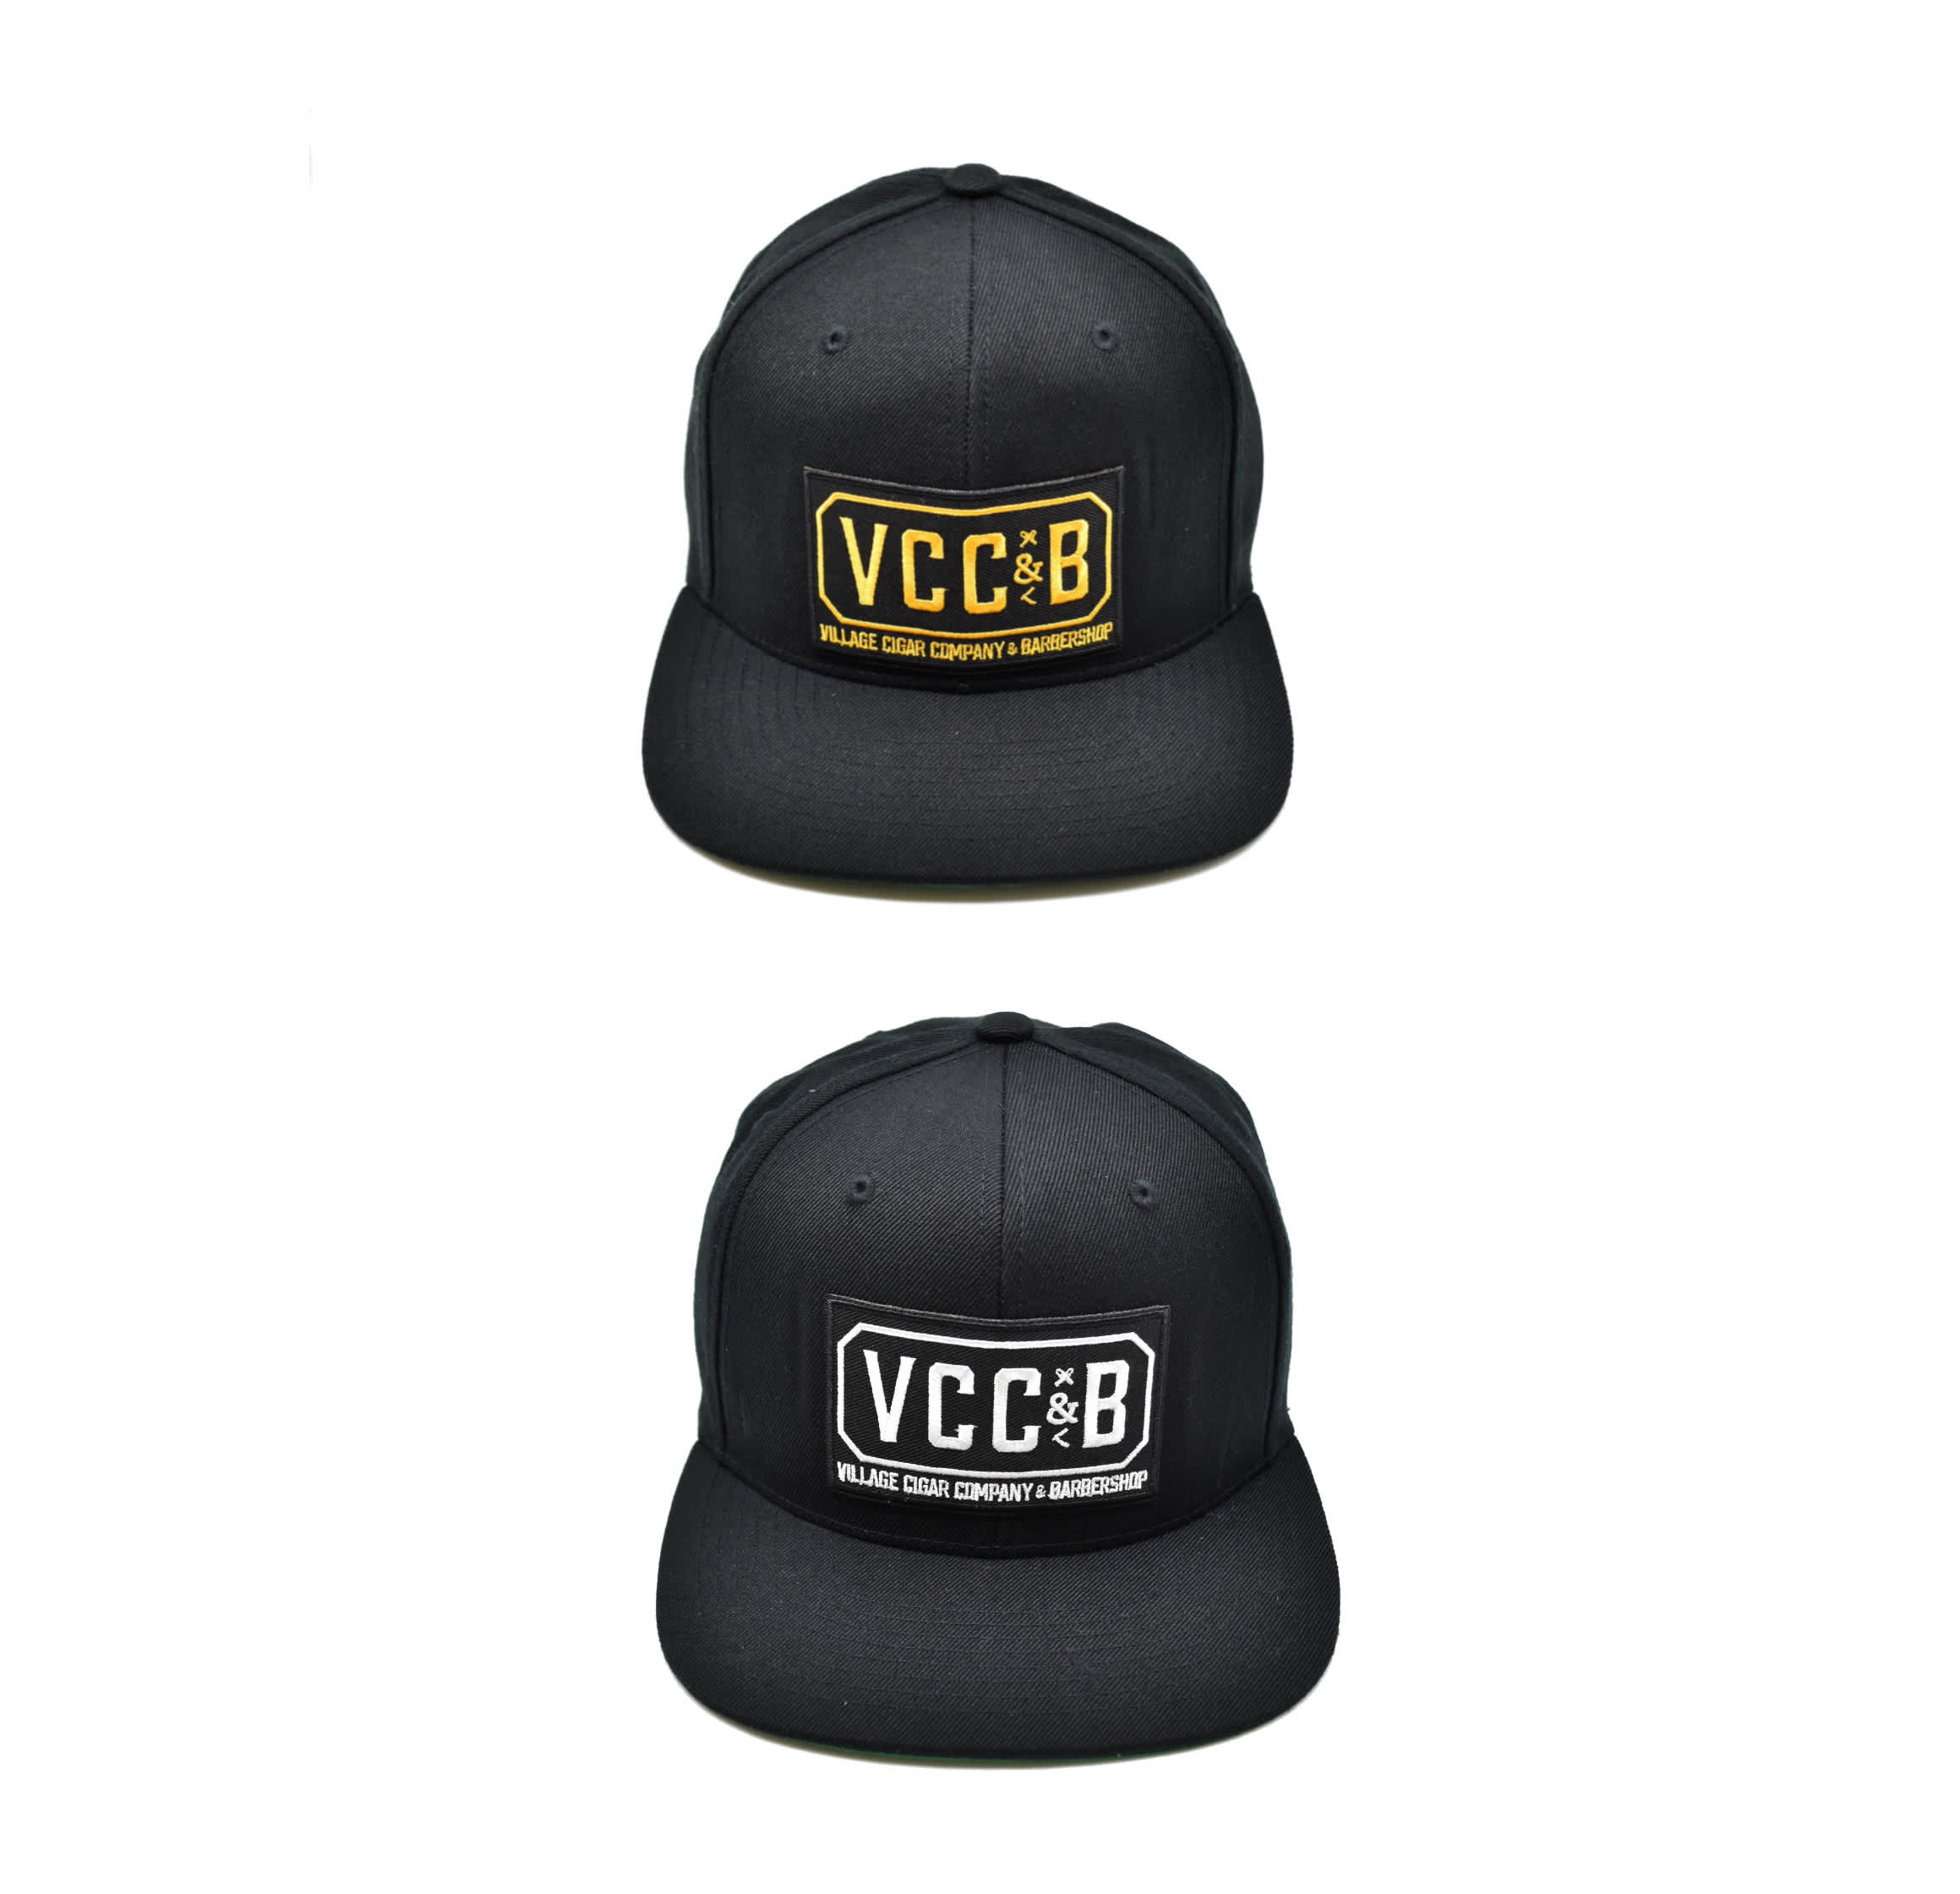 VCC&B Linear Flat Brim Hat - Village Cigar Company & Barbershop